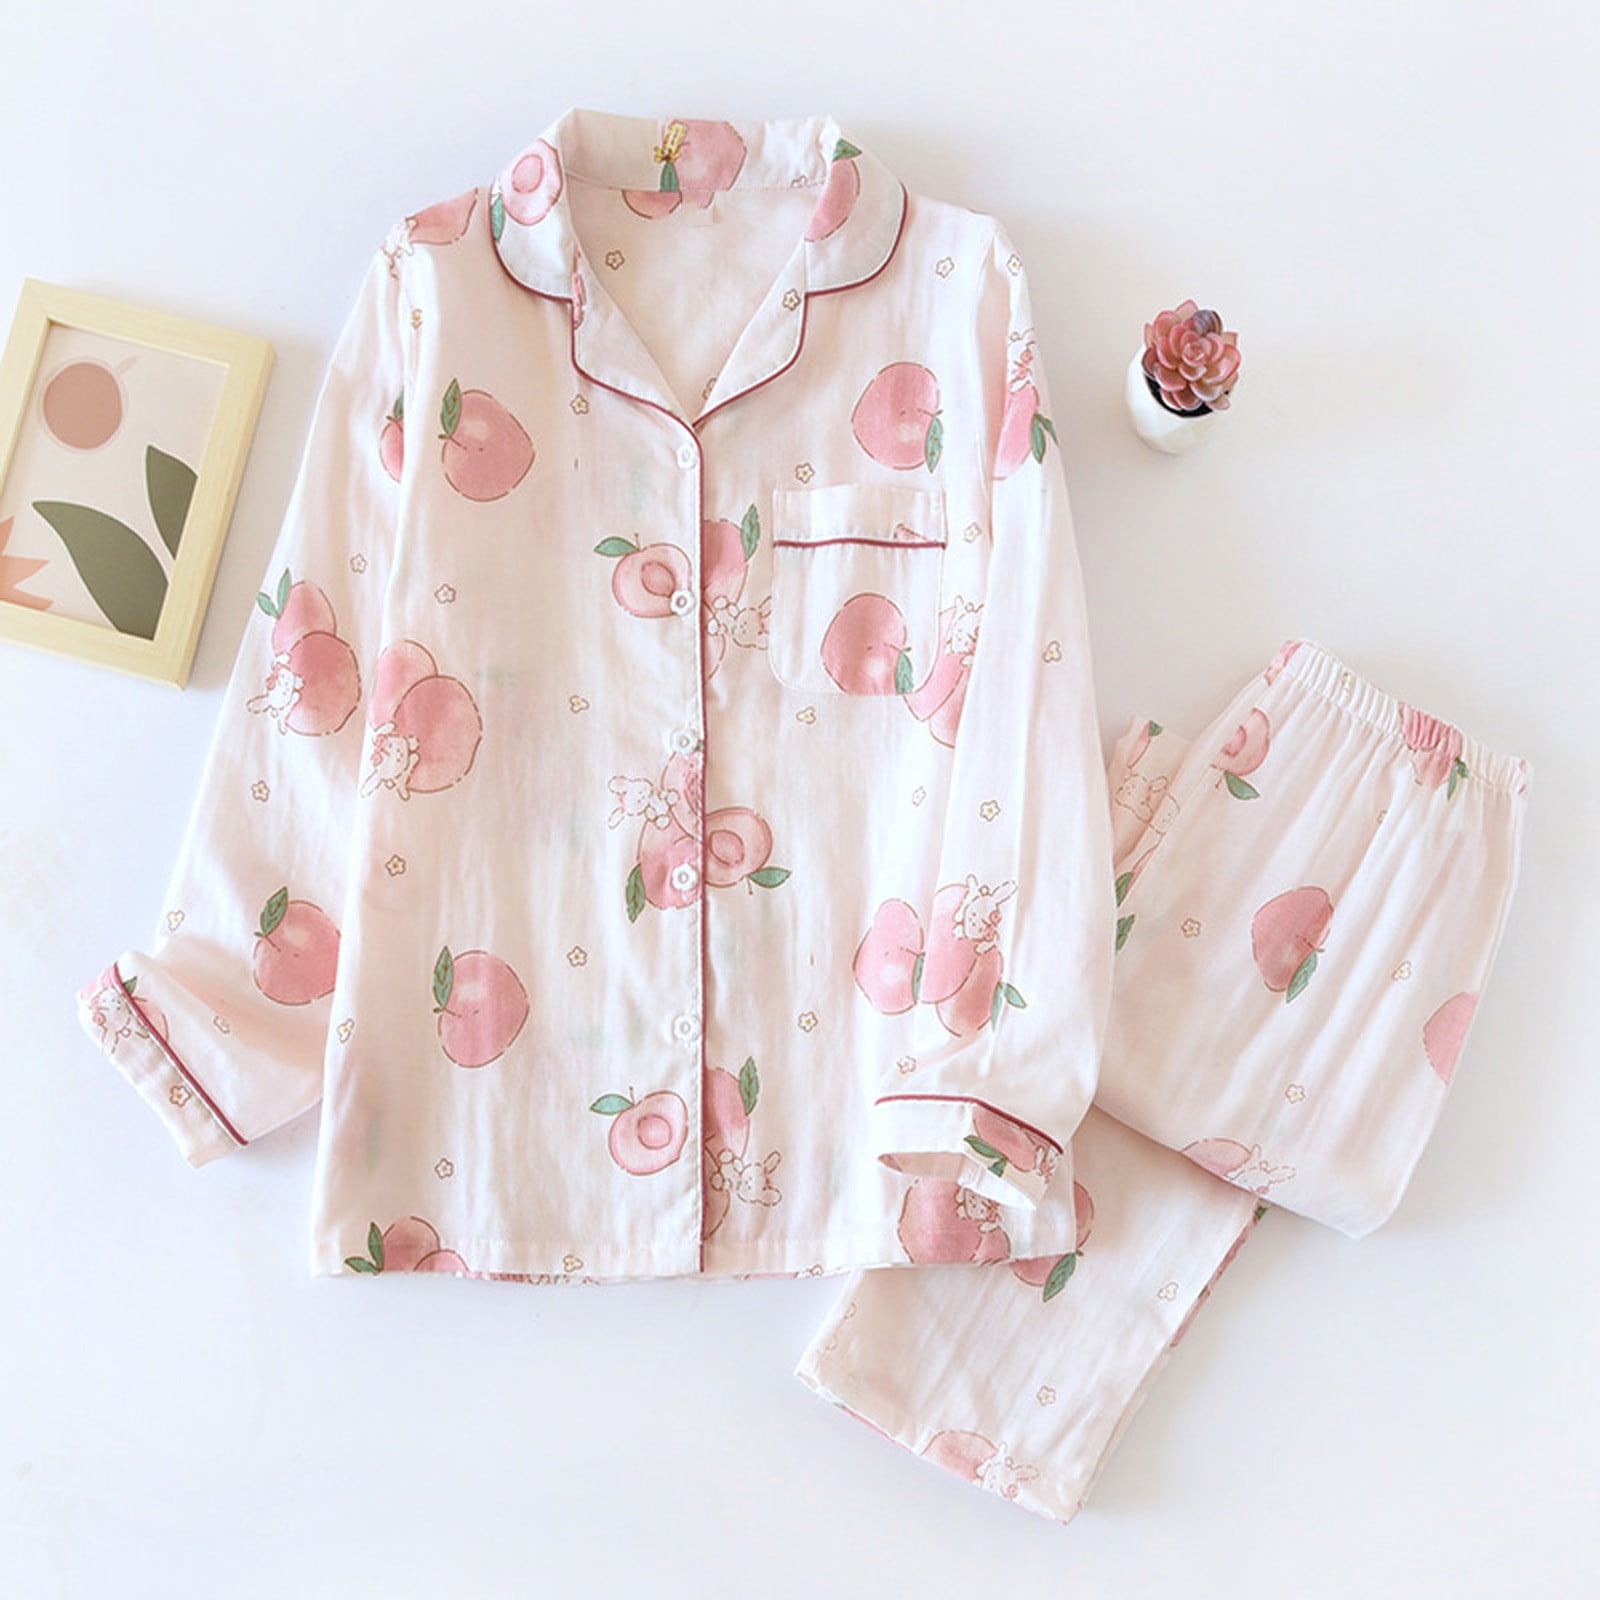 Coral Fleece Women's Autumn Winter Pajama Set Peach Print Ladies 2